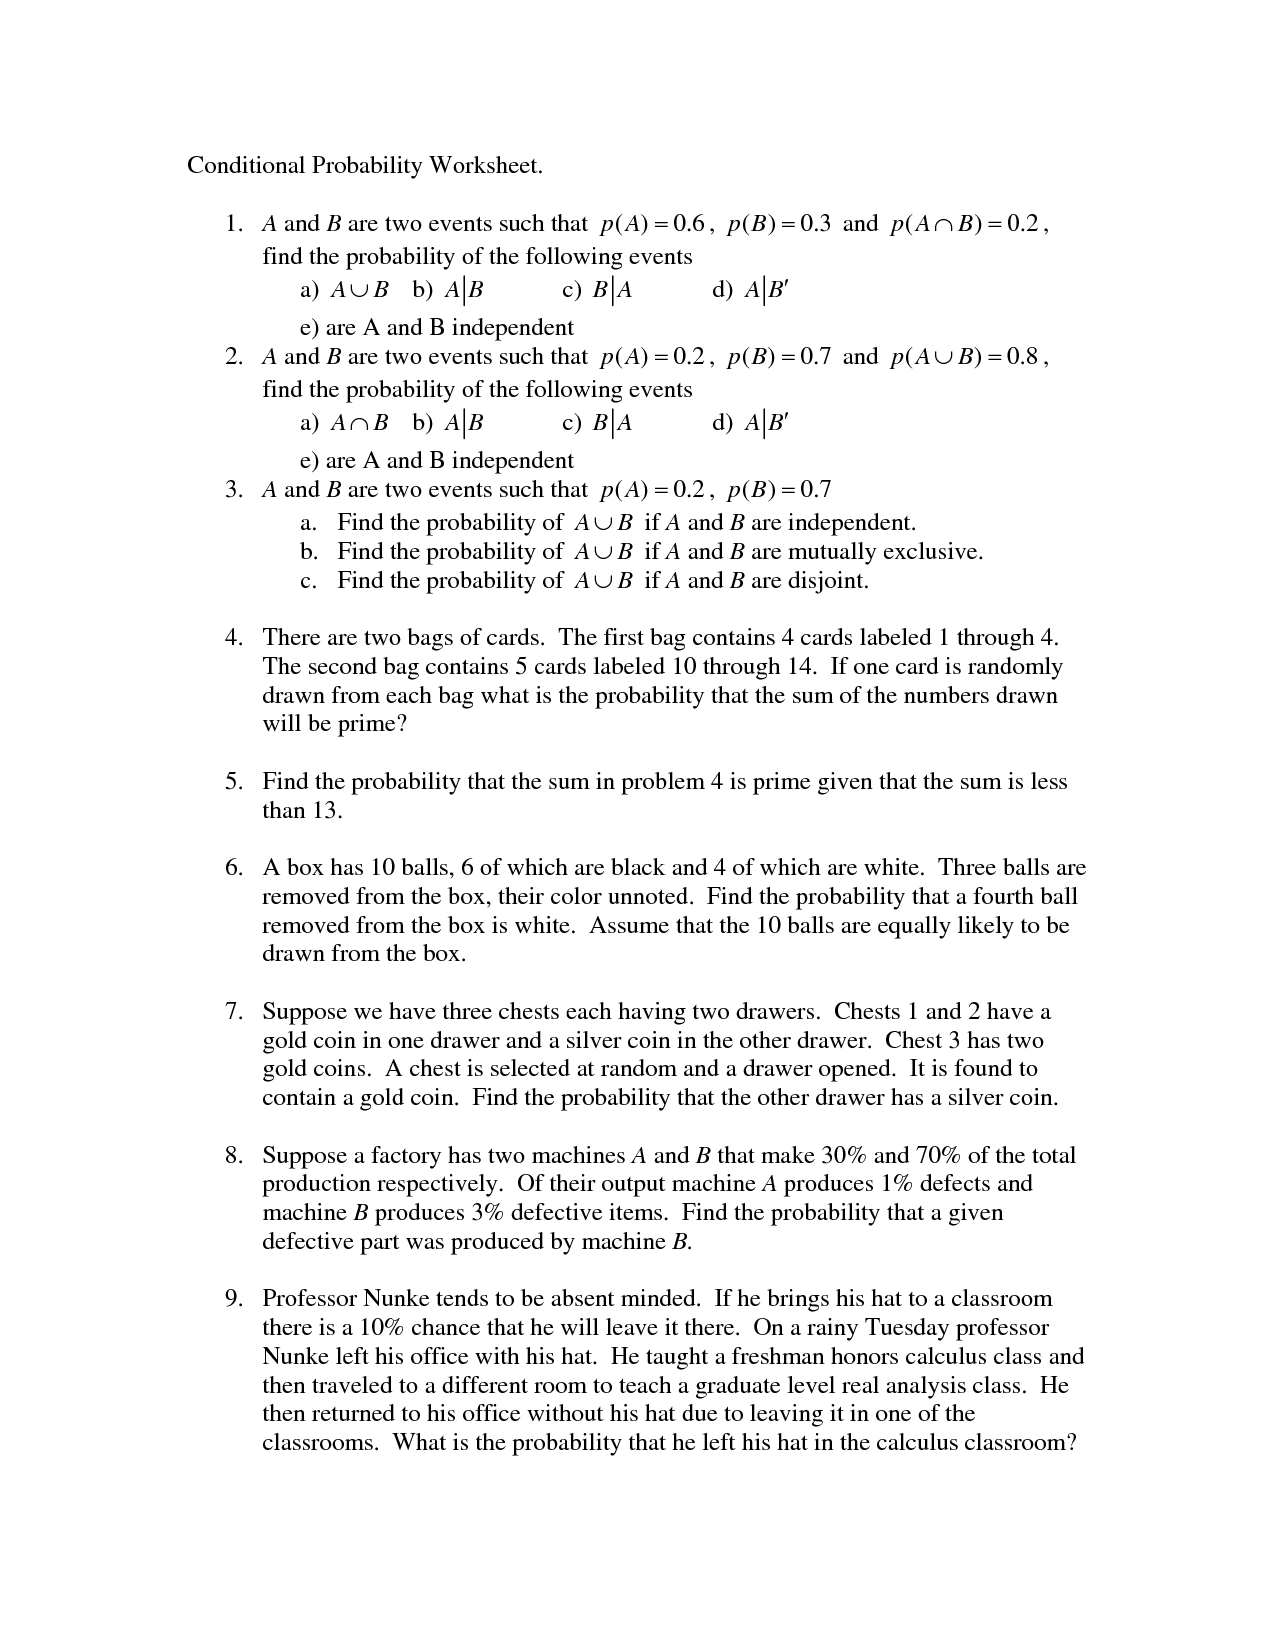 Conditional Probability Worksheet Image